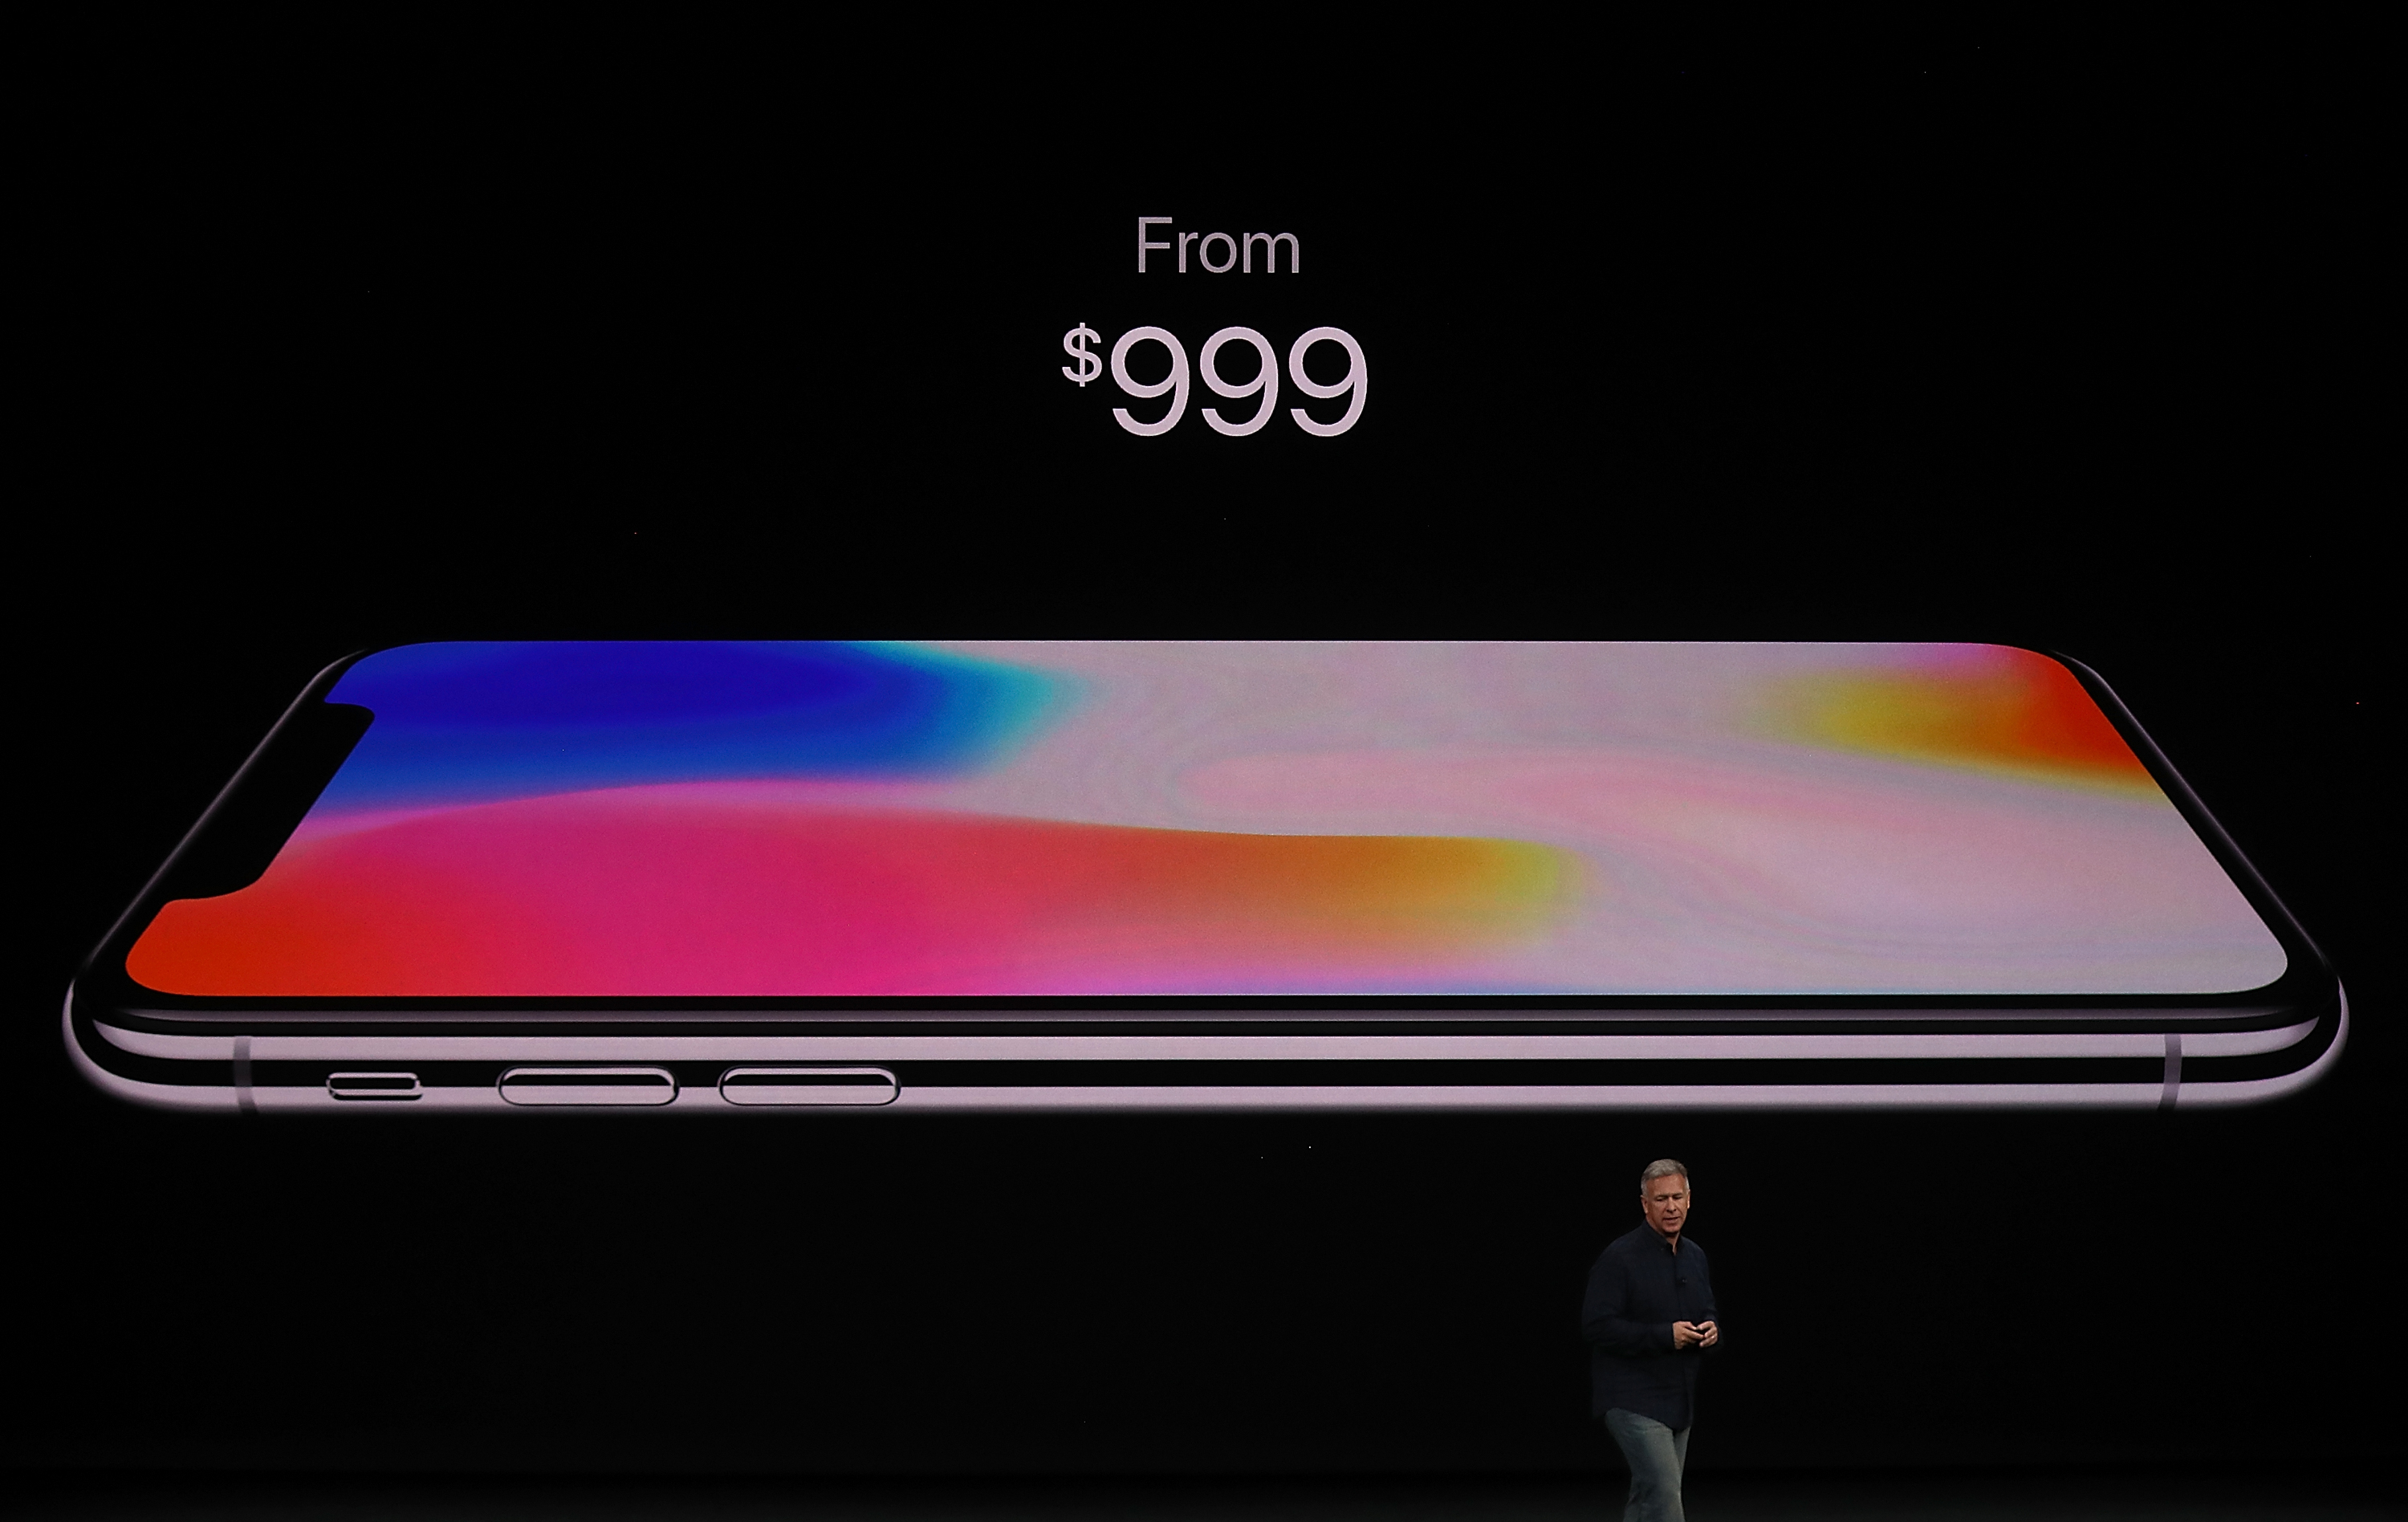 Apple unveils the iPhone X